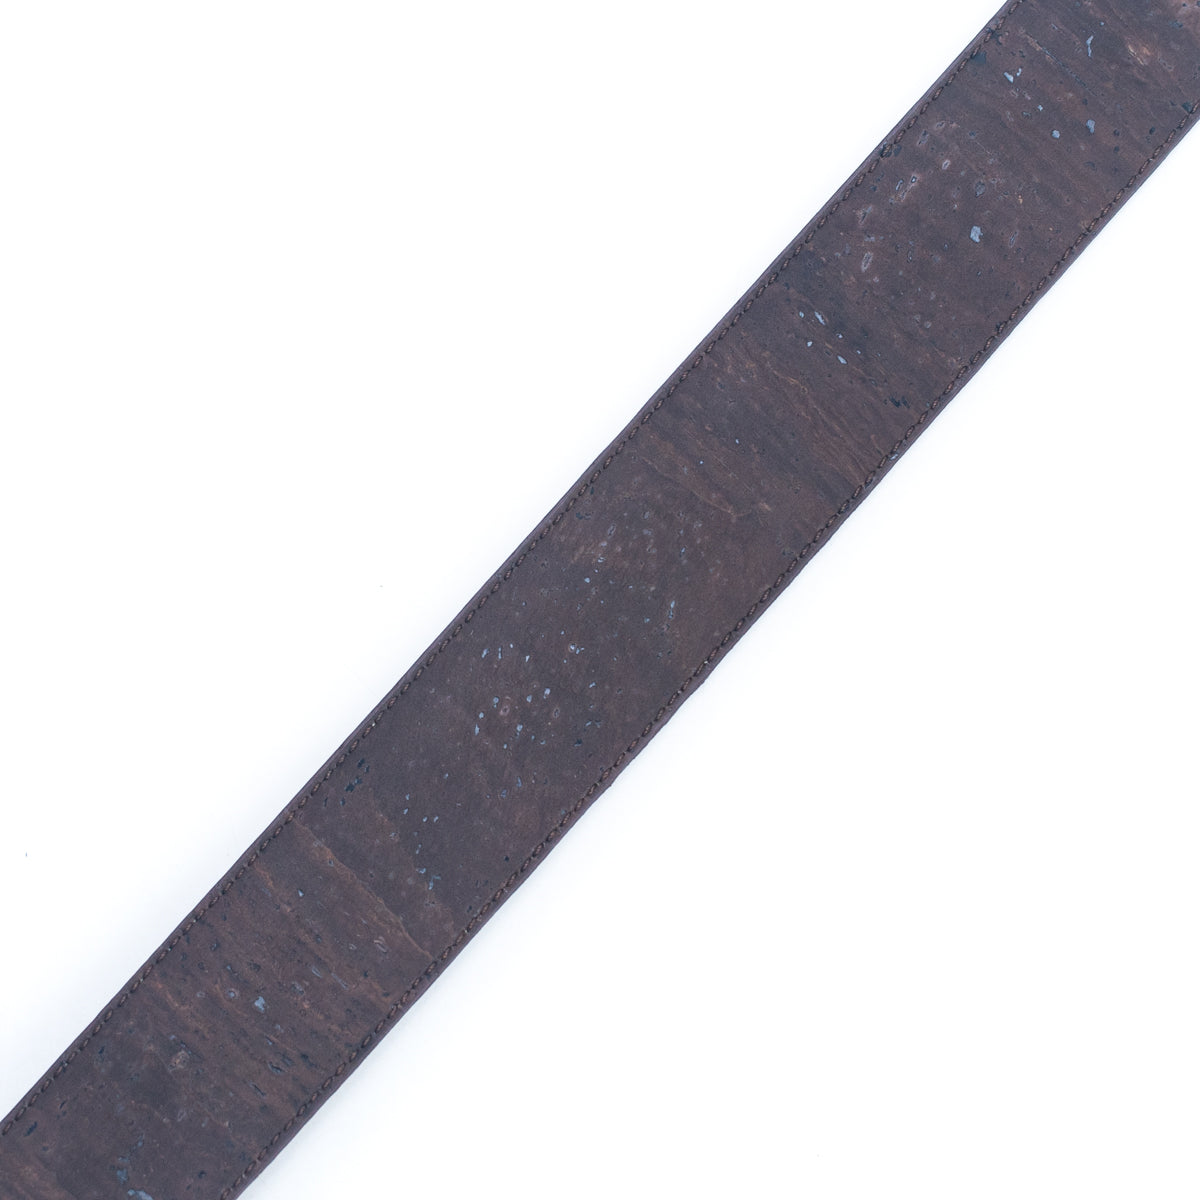 Men's Reversible Natural Cork Leather Belt | THE CORK COLLECTION